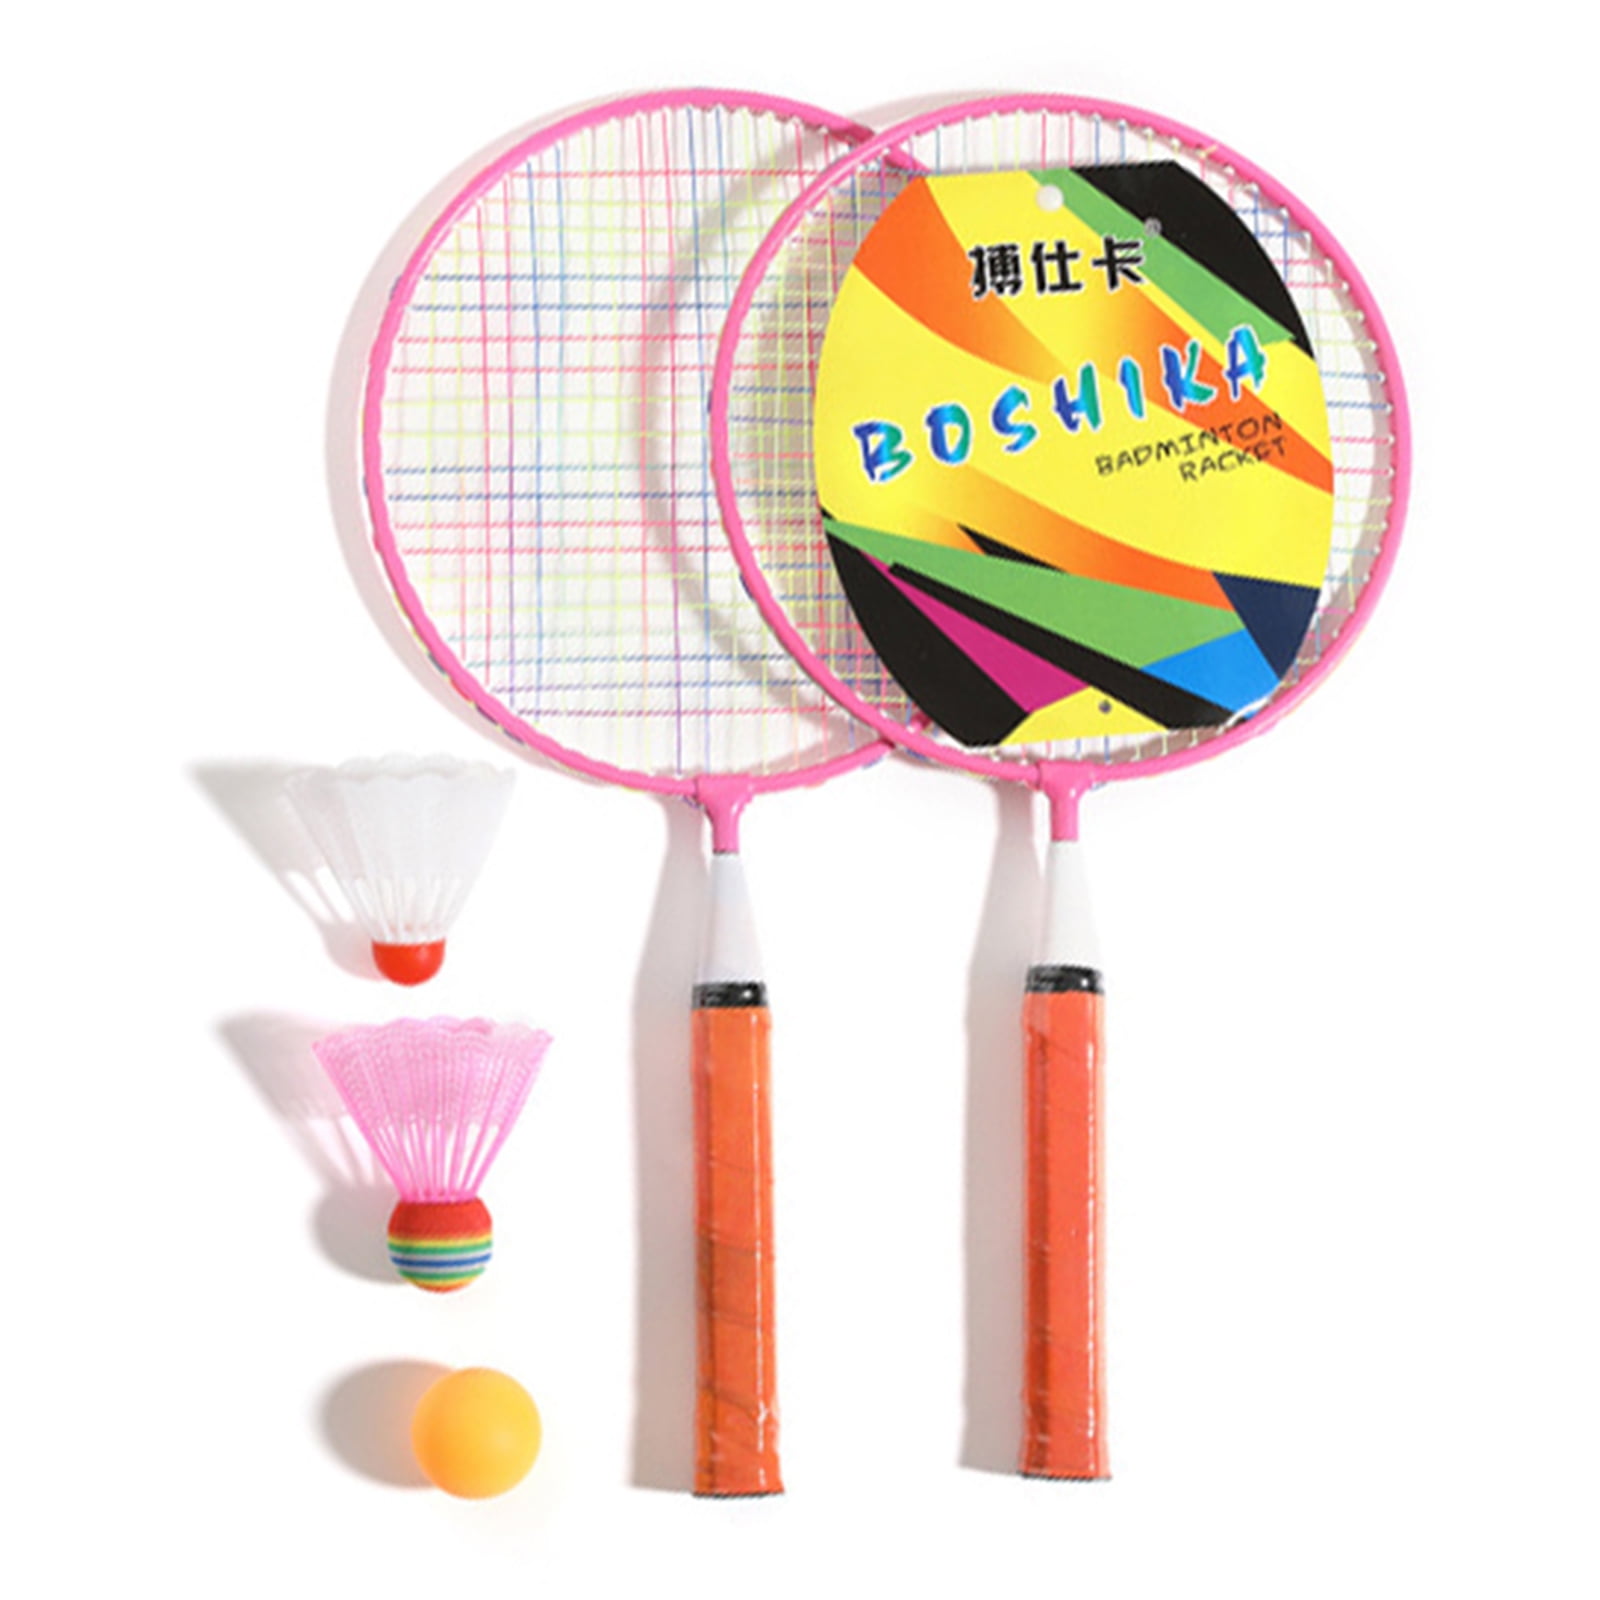 New Central Sports Badminton Racket Junior Prima Mini Badminton Racket 